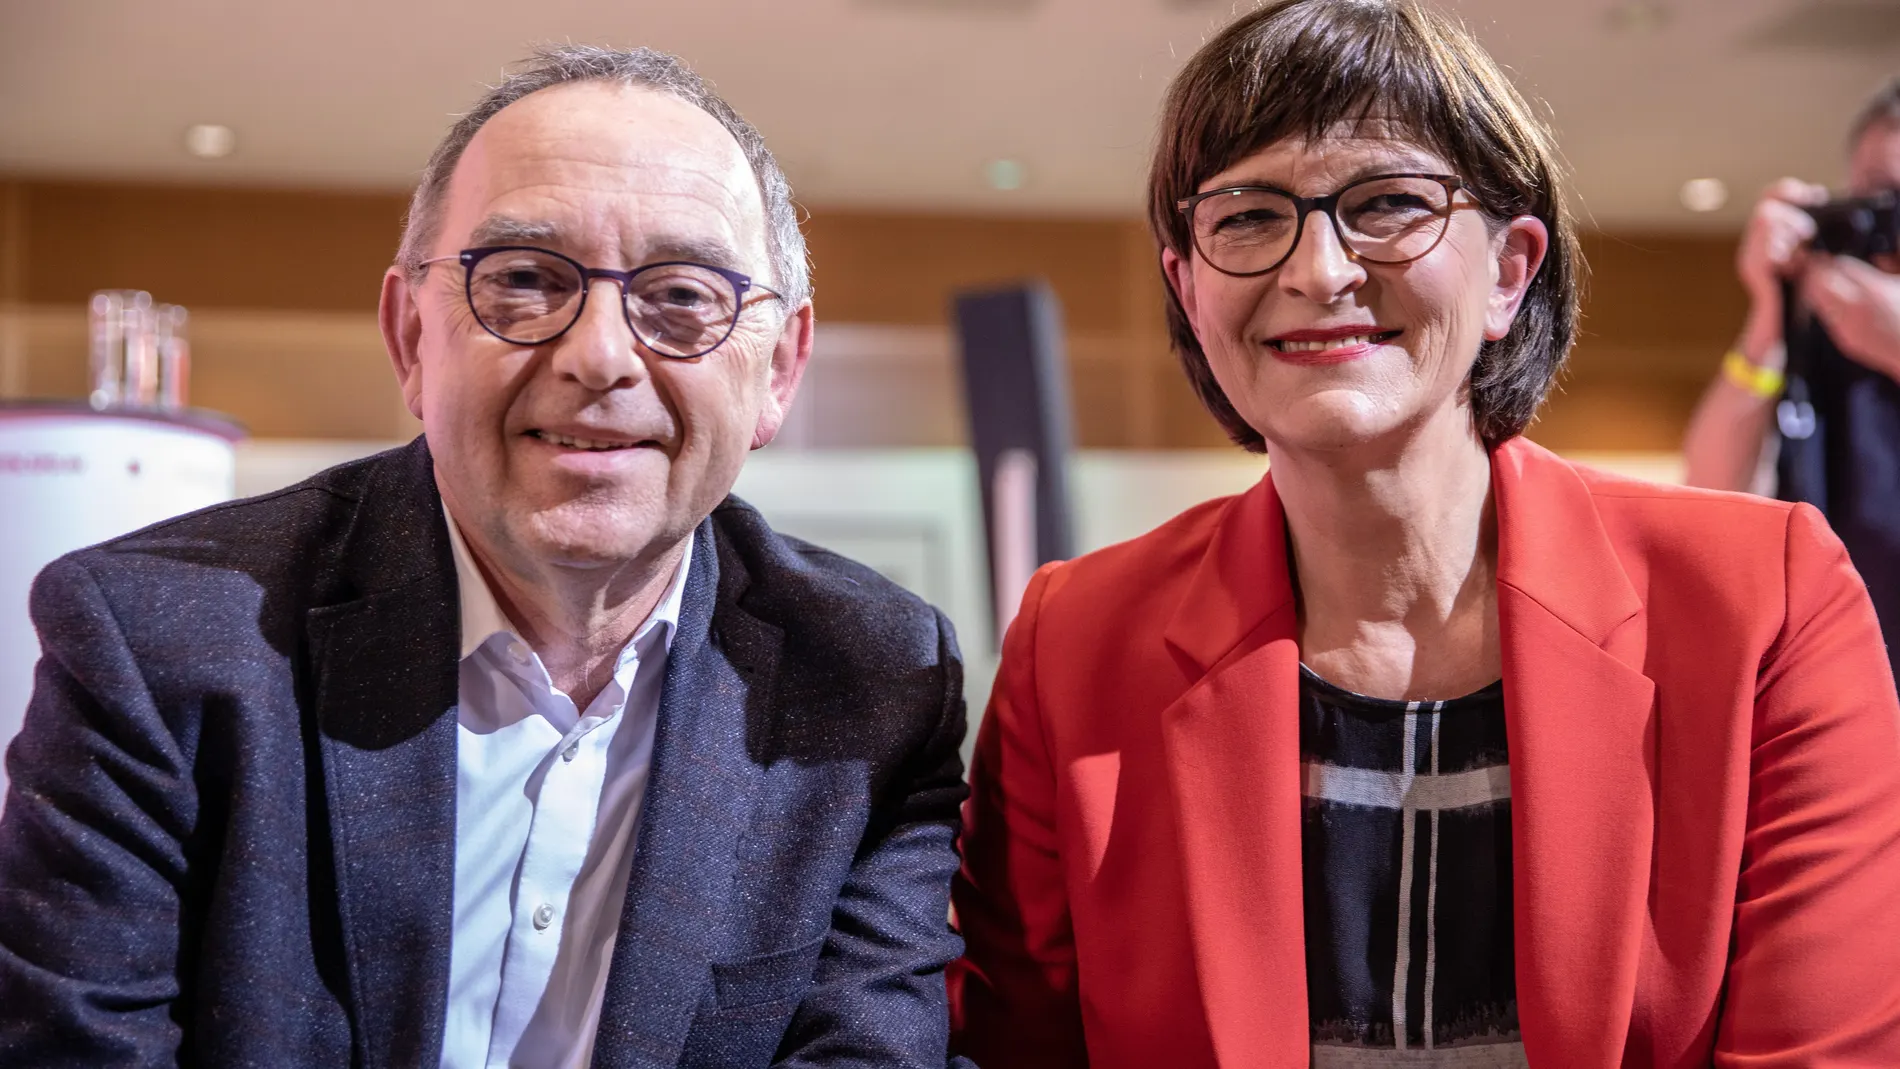 Esken and Walter-Borjans win race for SPD party leadership